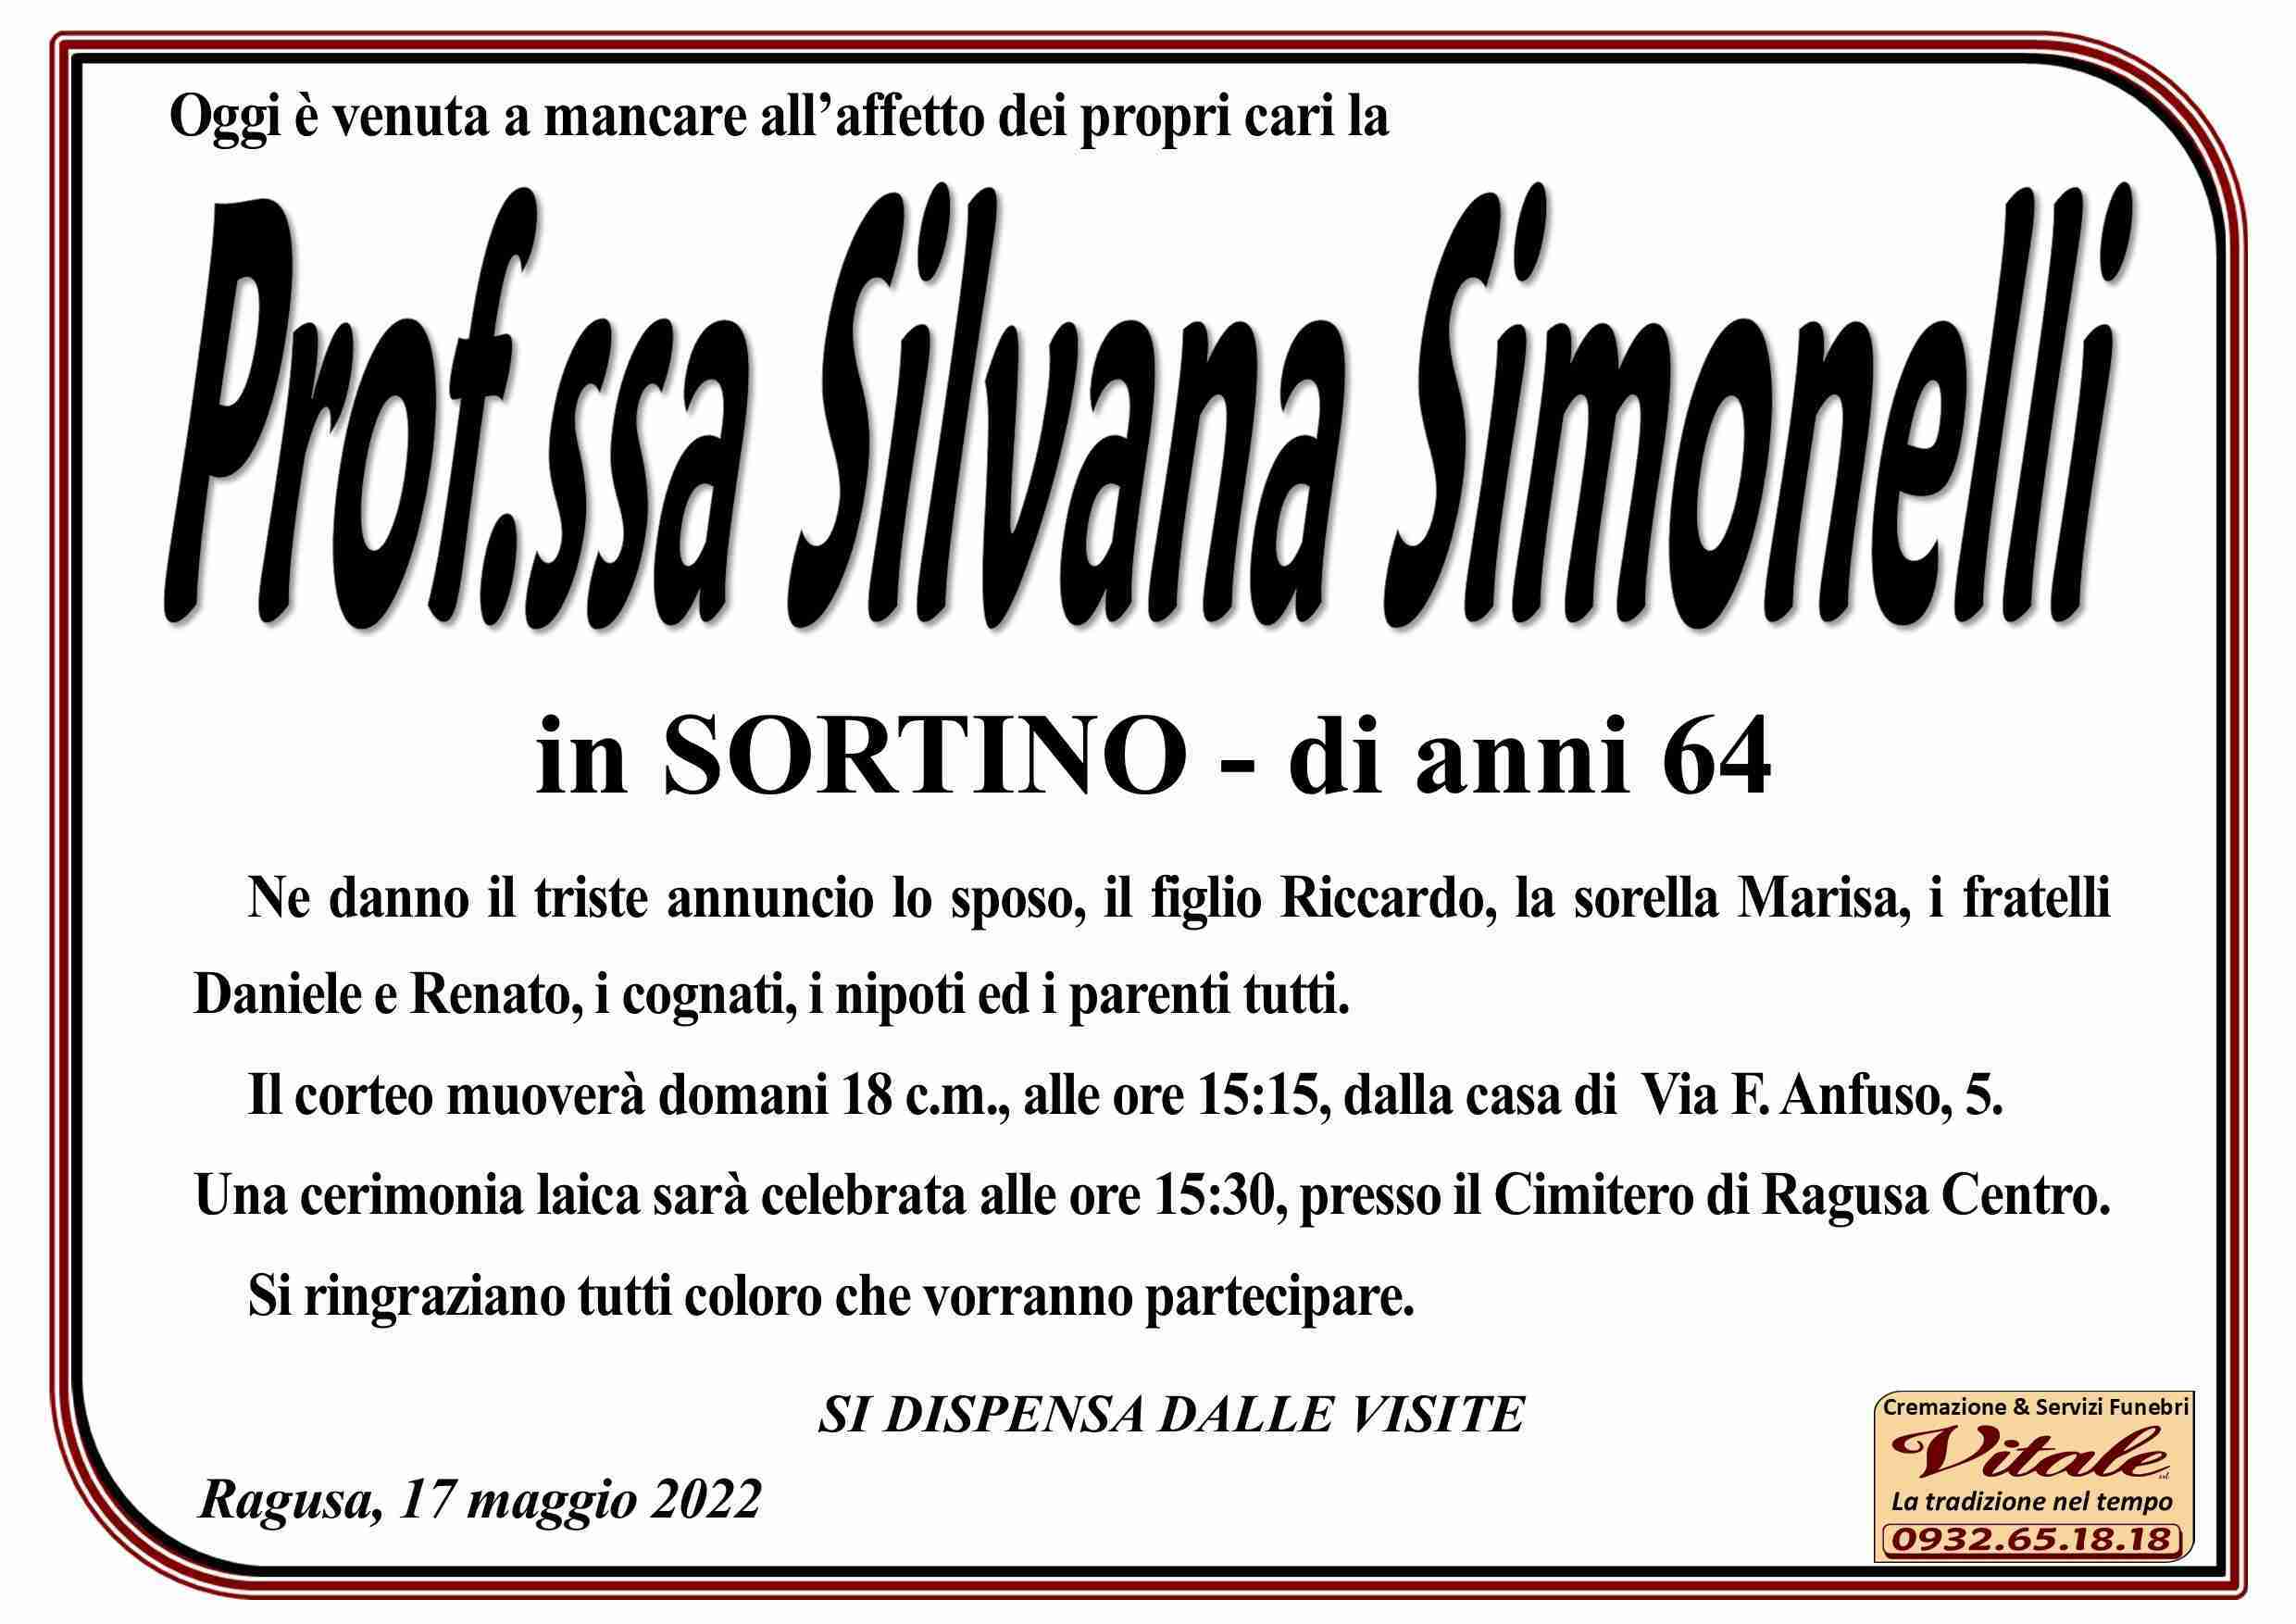 Silvana Simonelli